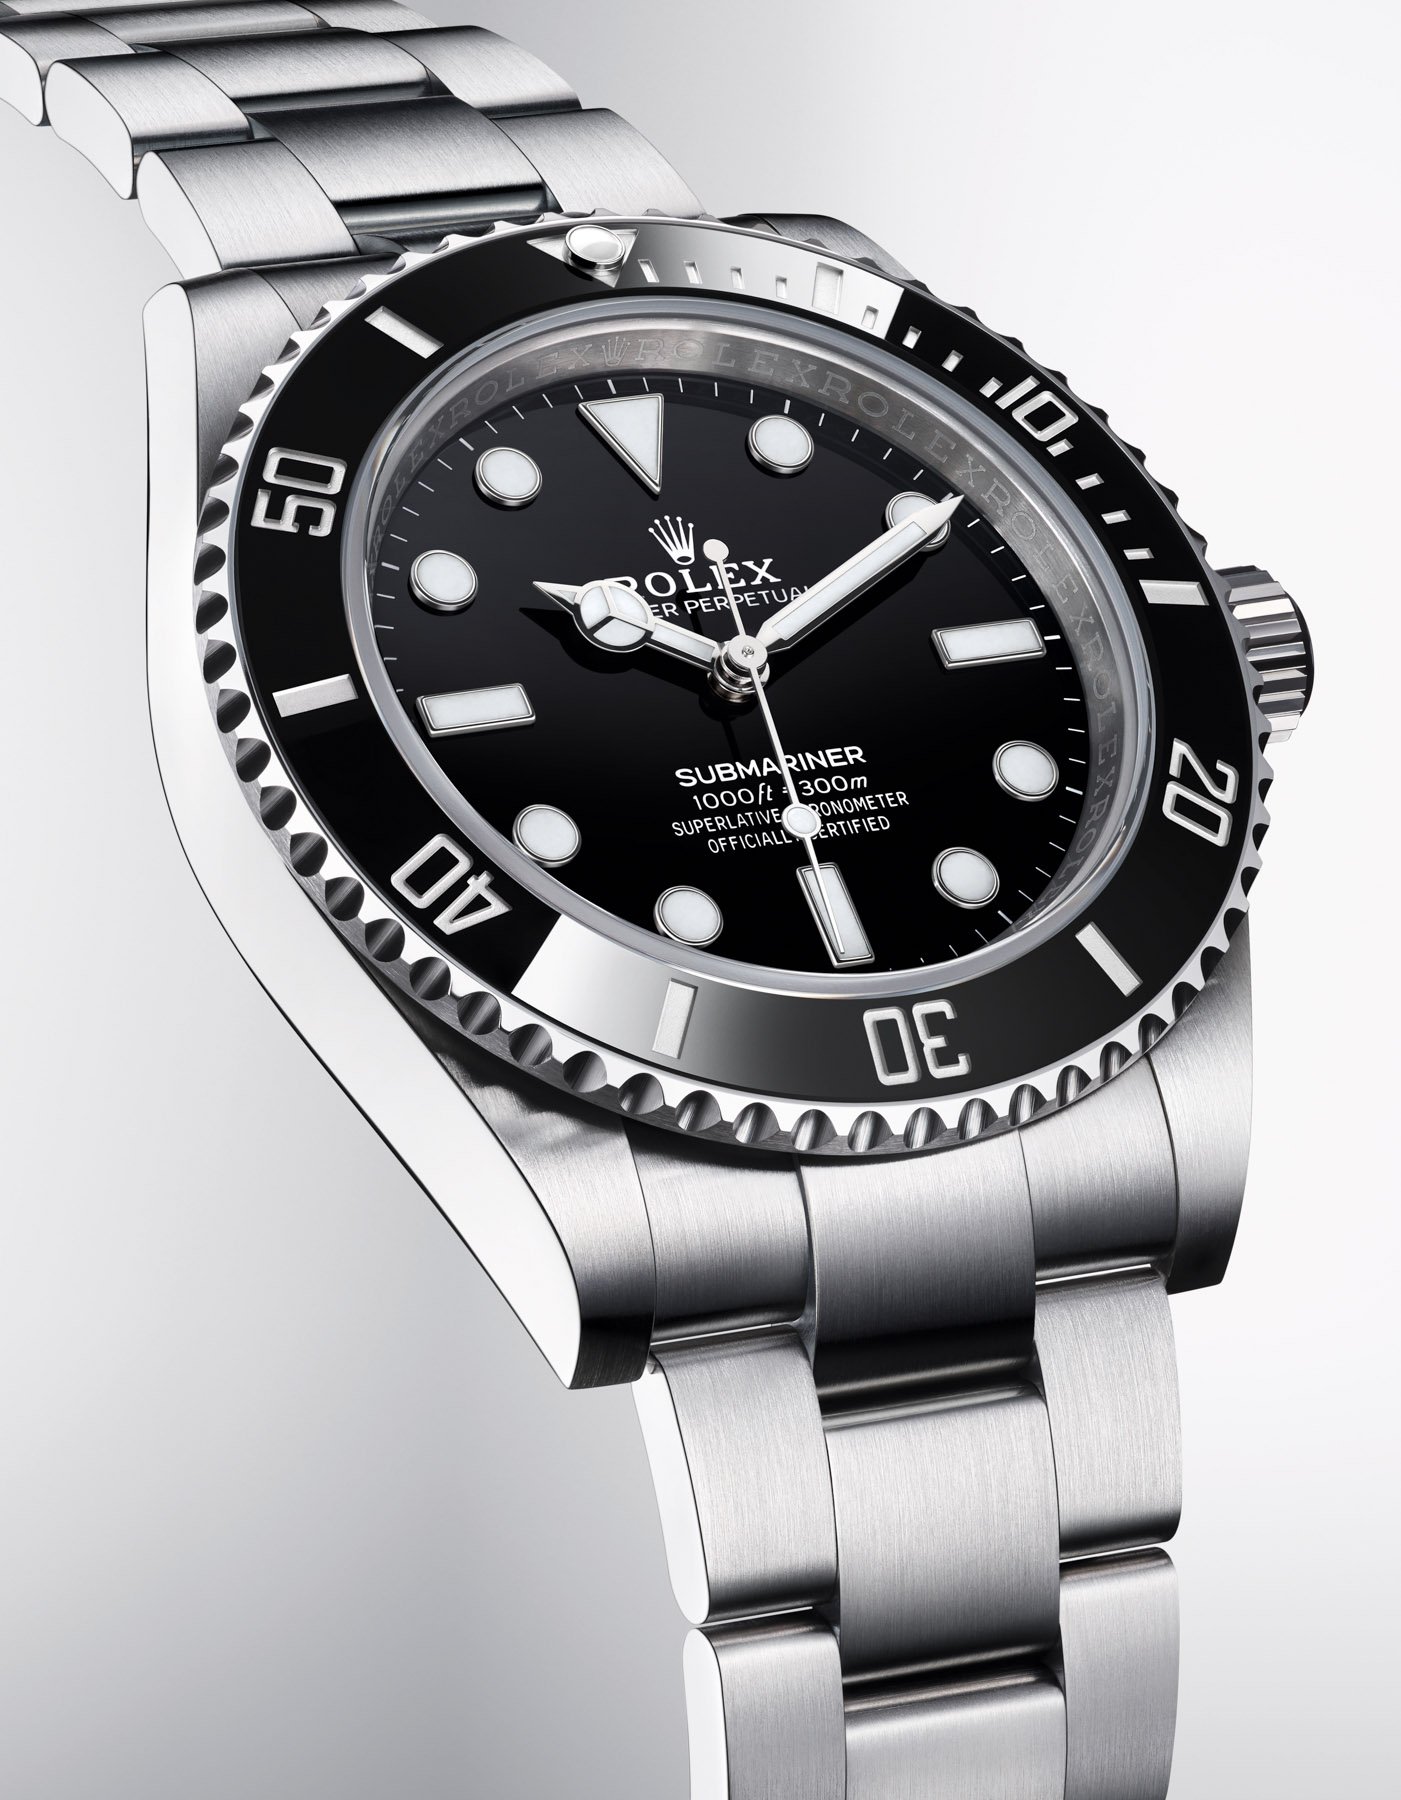 Sub41 fitment on a 6 wrist? - Rolex Forums - Rolex Watch Forum